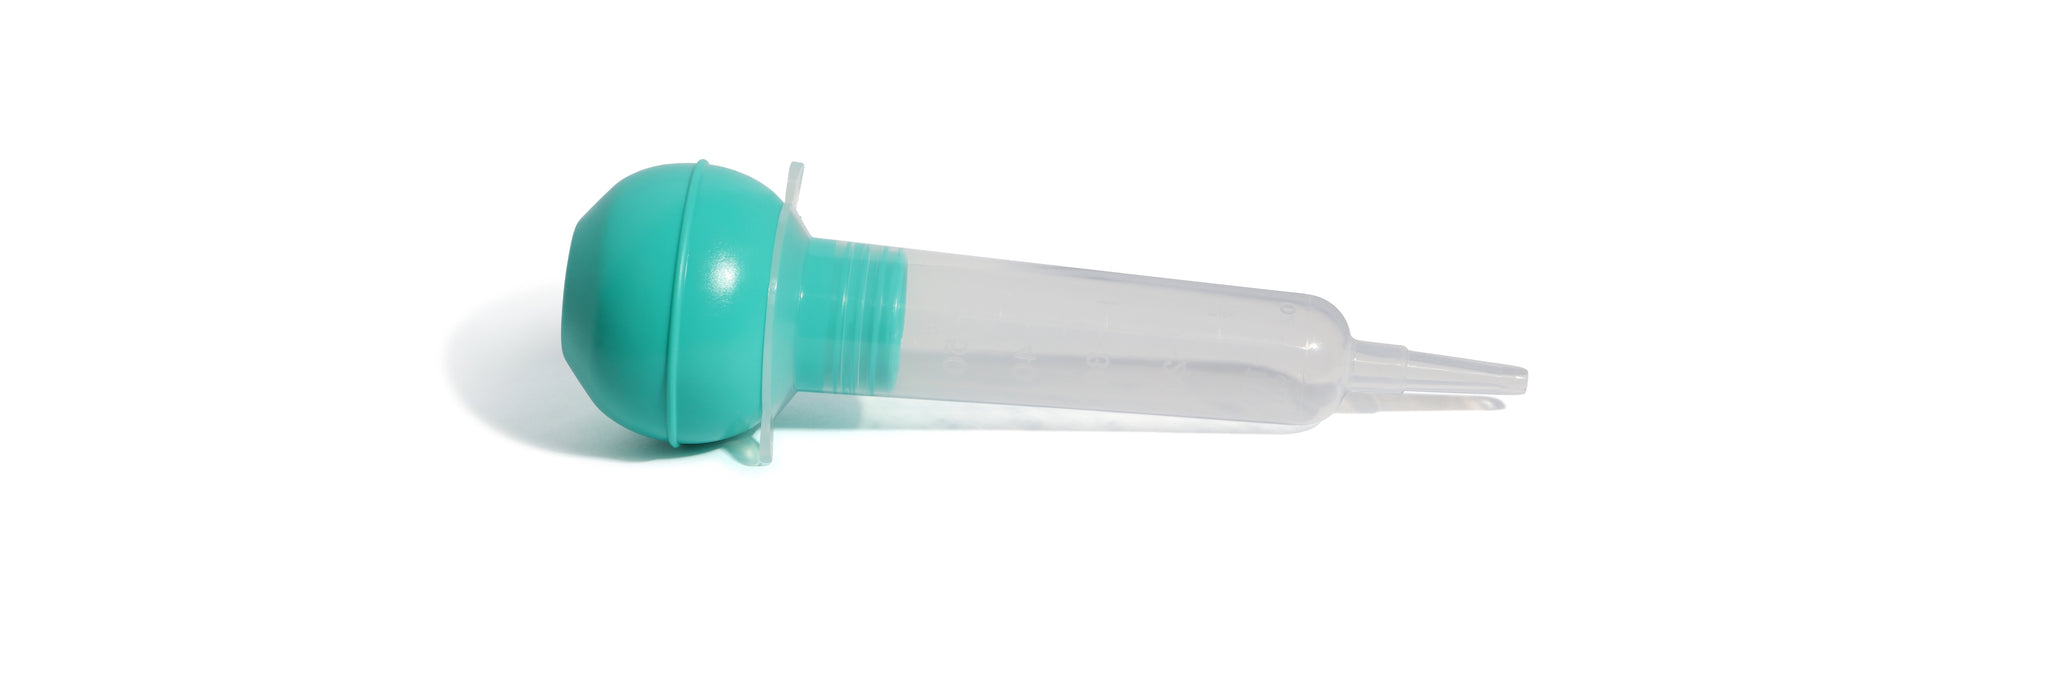 An example of a bulb syringe.